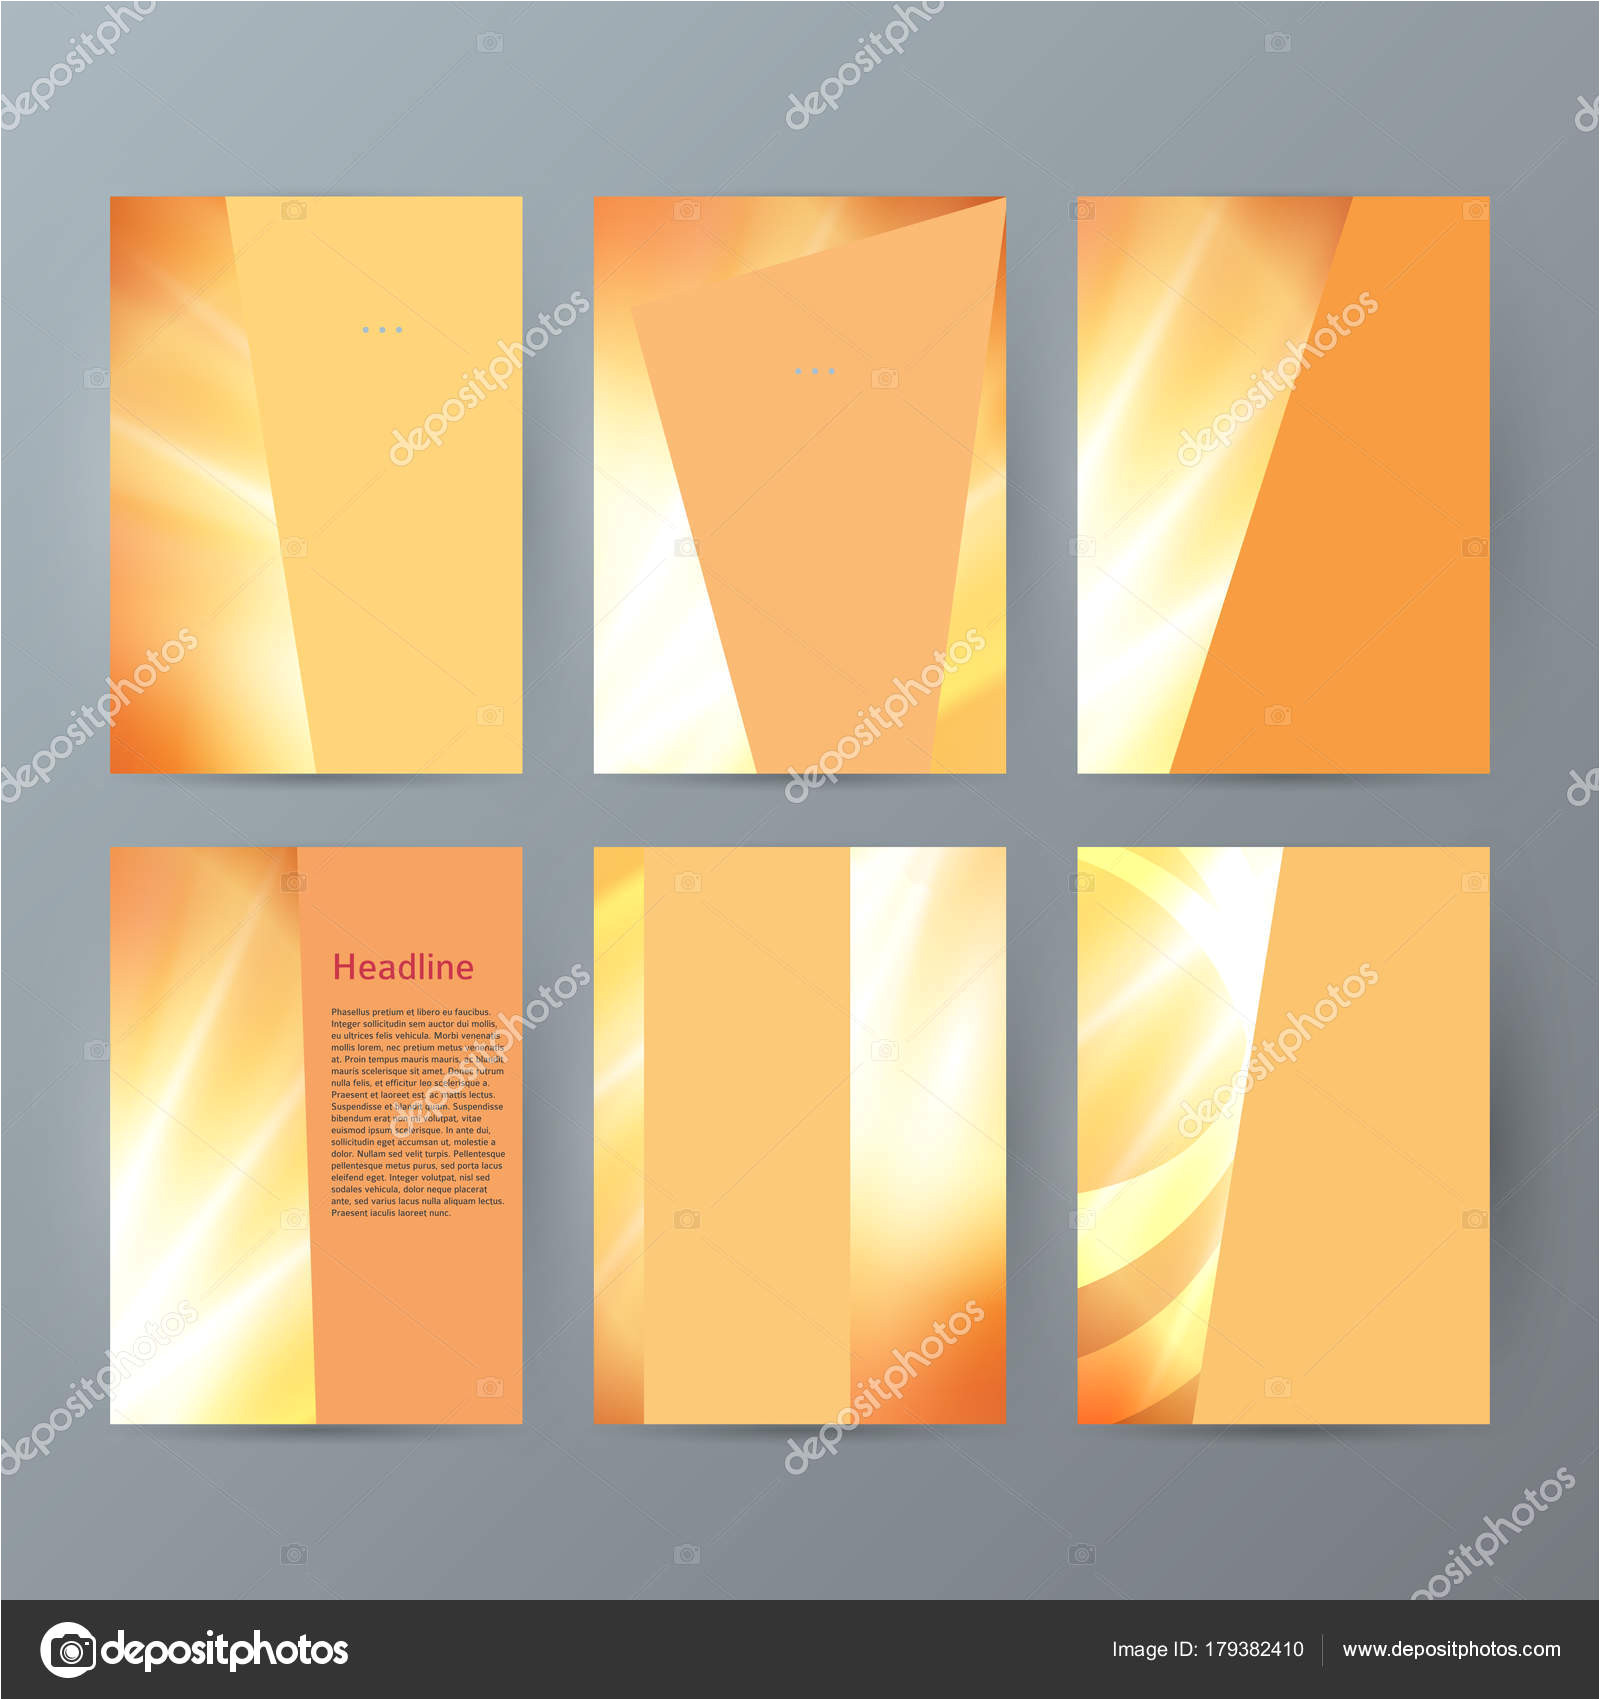 depositphotos 179382410 stock illustration business templates presentation glowing sun jpg